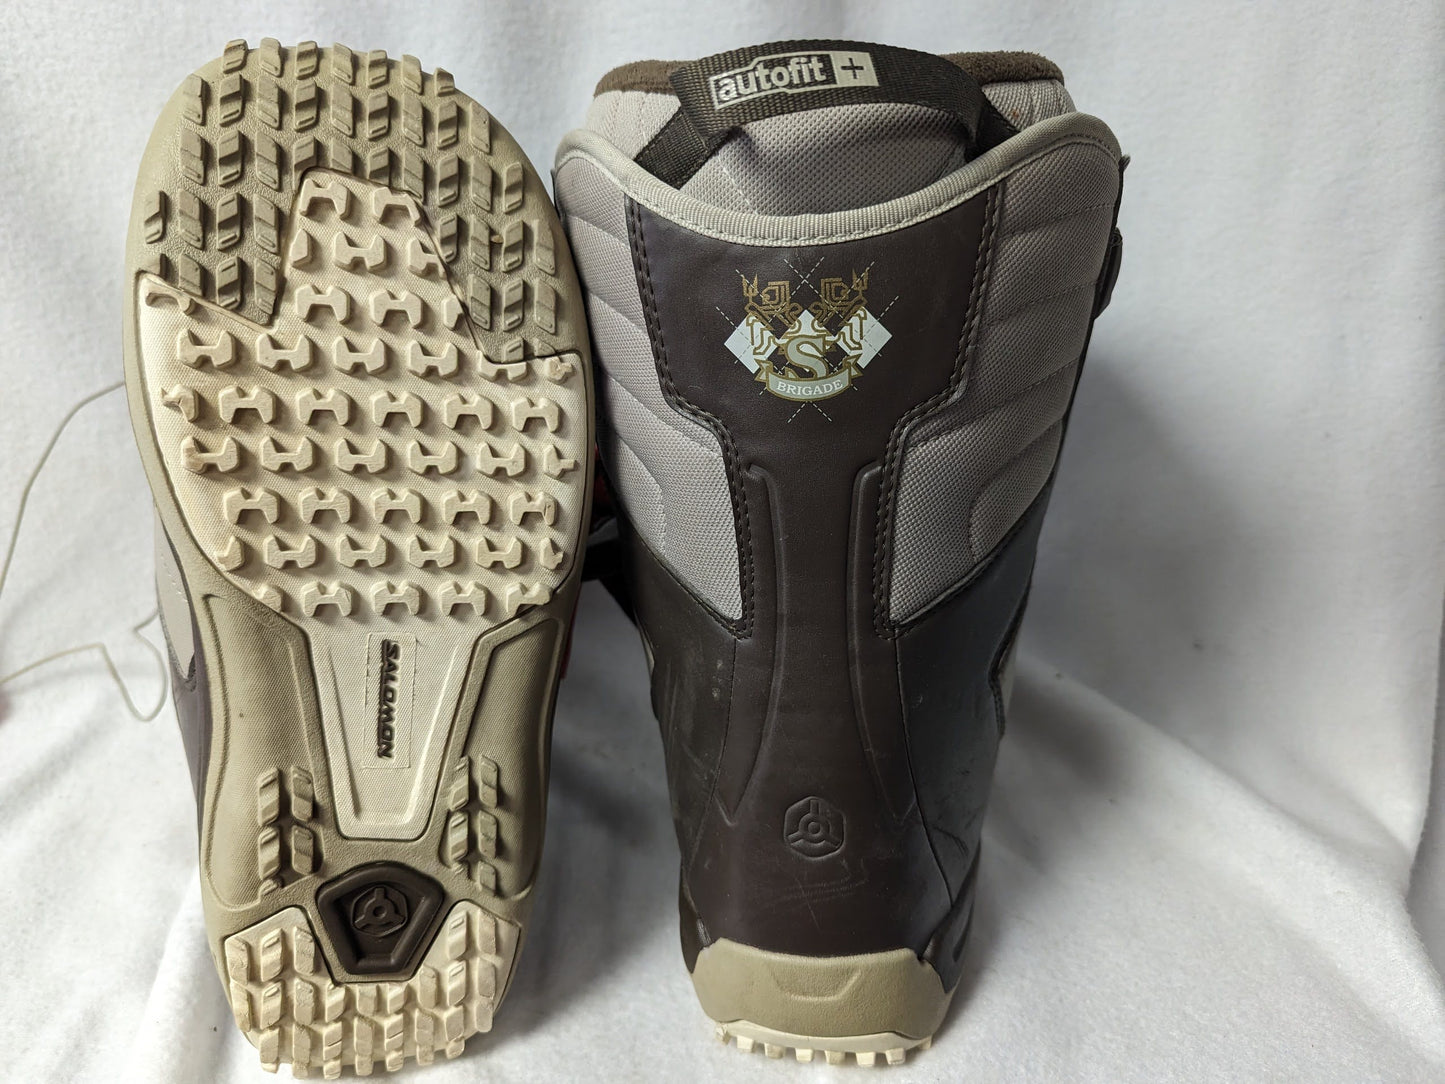 Salomon Brigade Snowboard Boots Size 7 Color Brown Condition Used